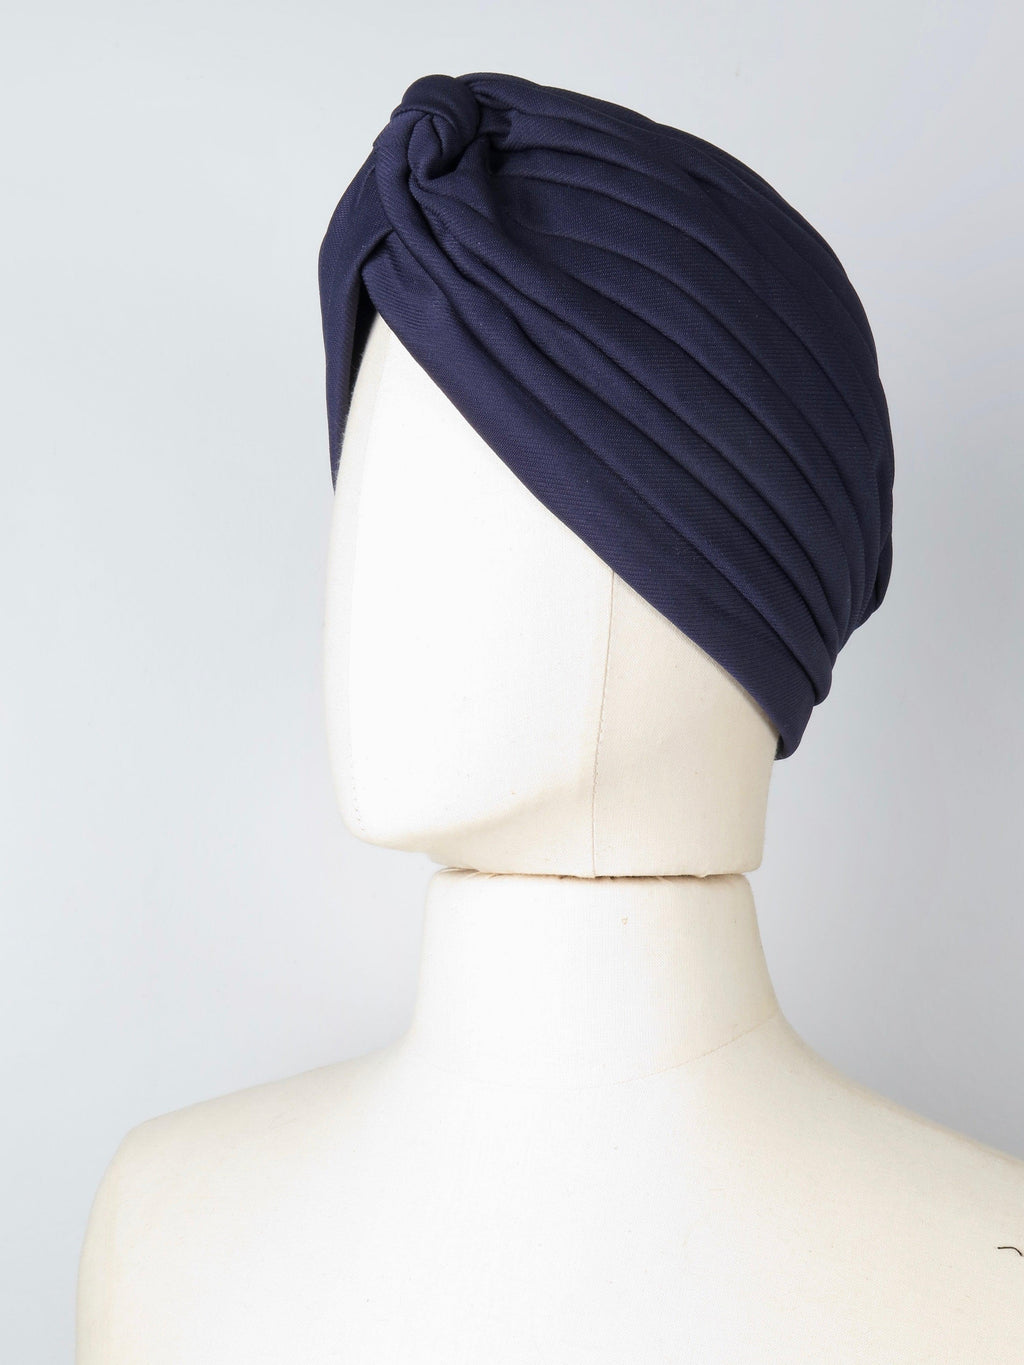 Fabric Turbans - The Harlequin